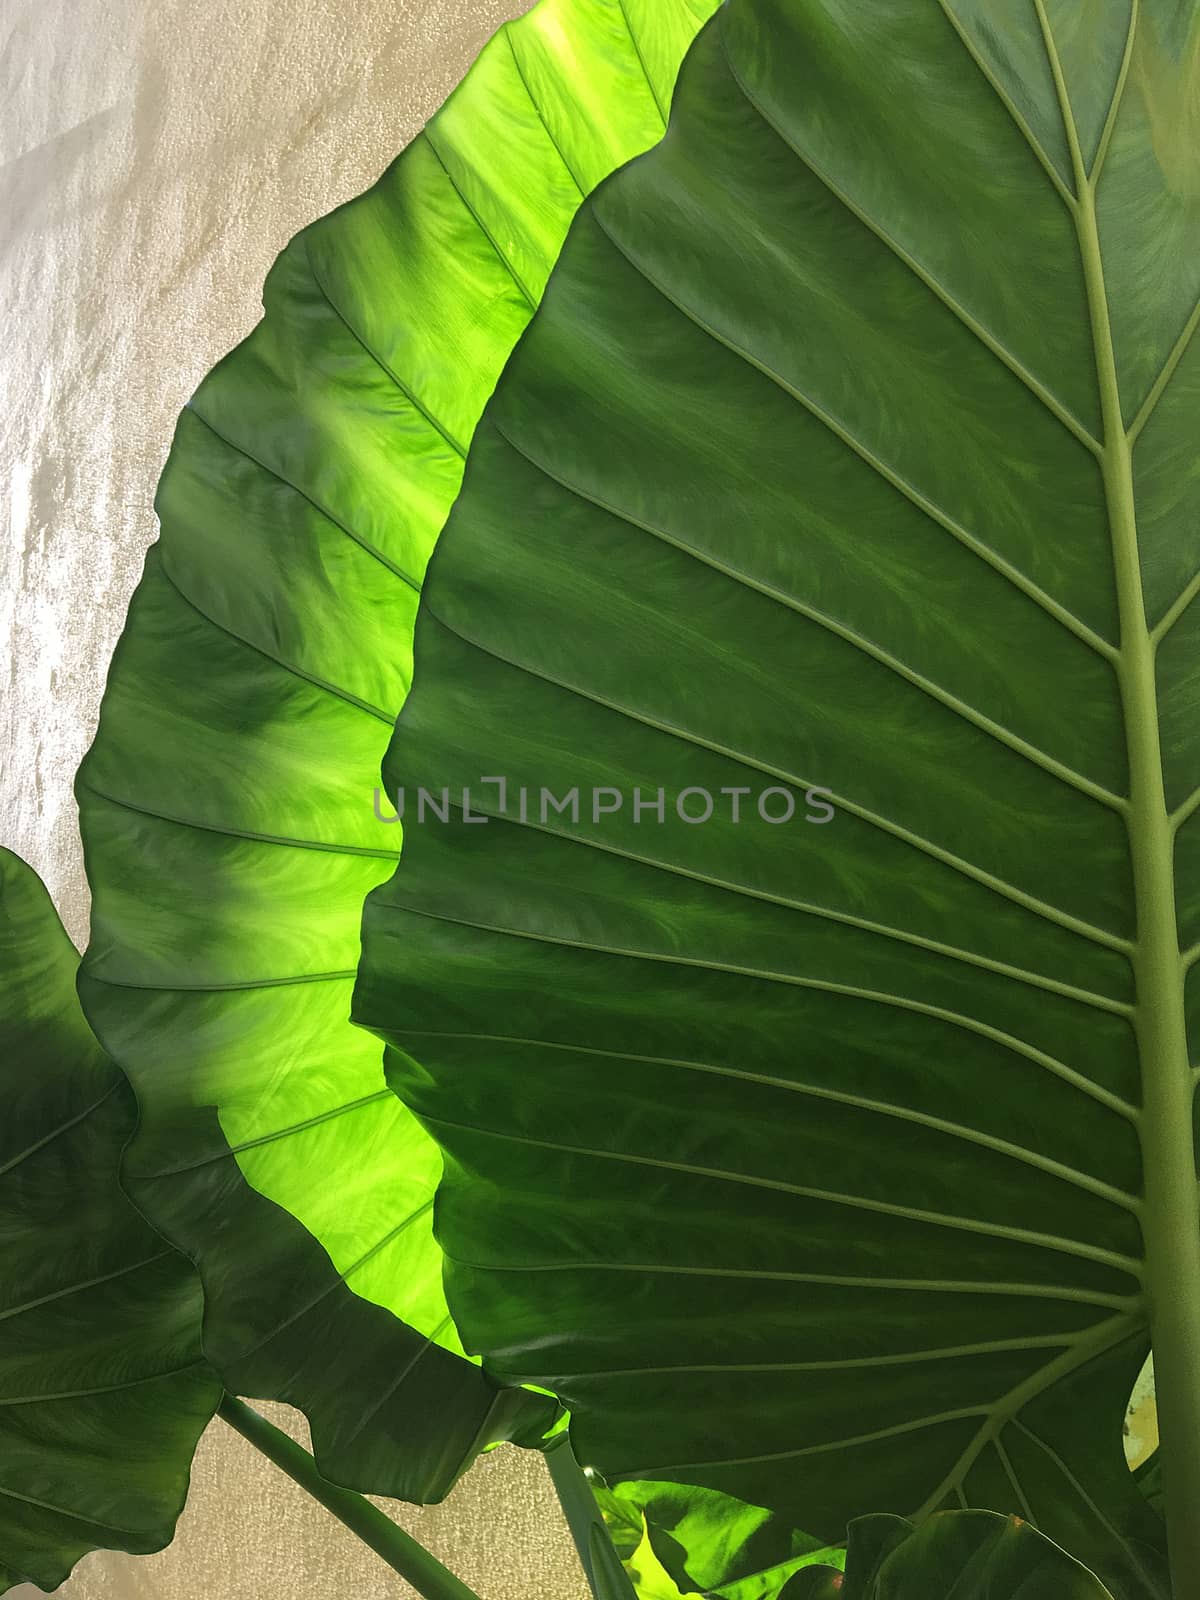 Green leaf closeup full frame abstract digital illustration